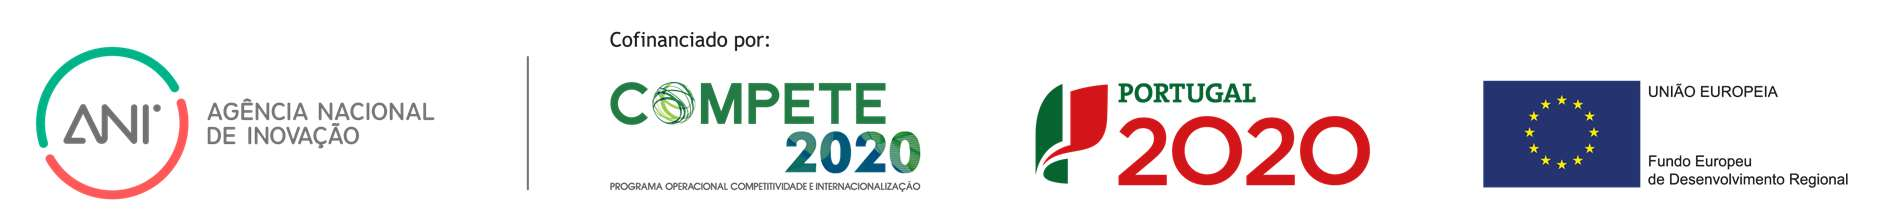 patrocinadores ani compete2020 portugal 2020 ue